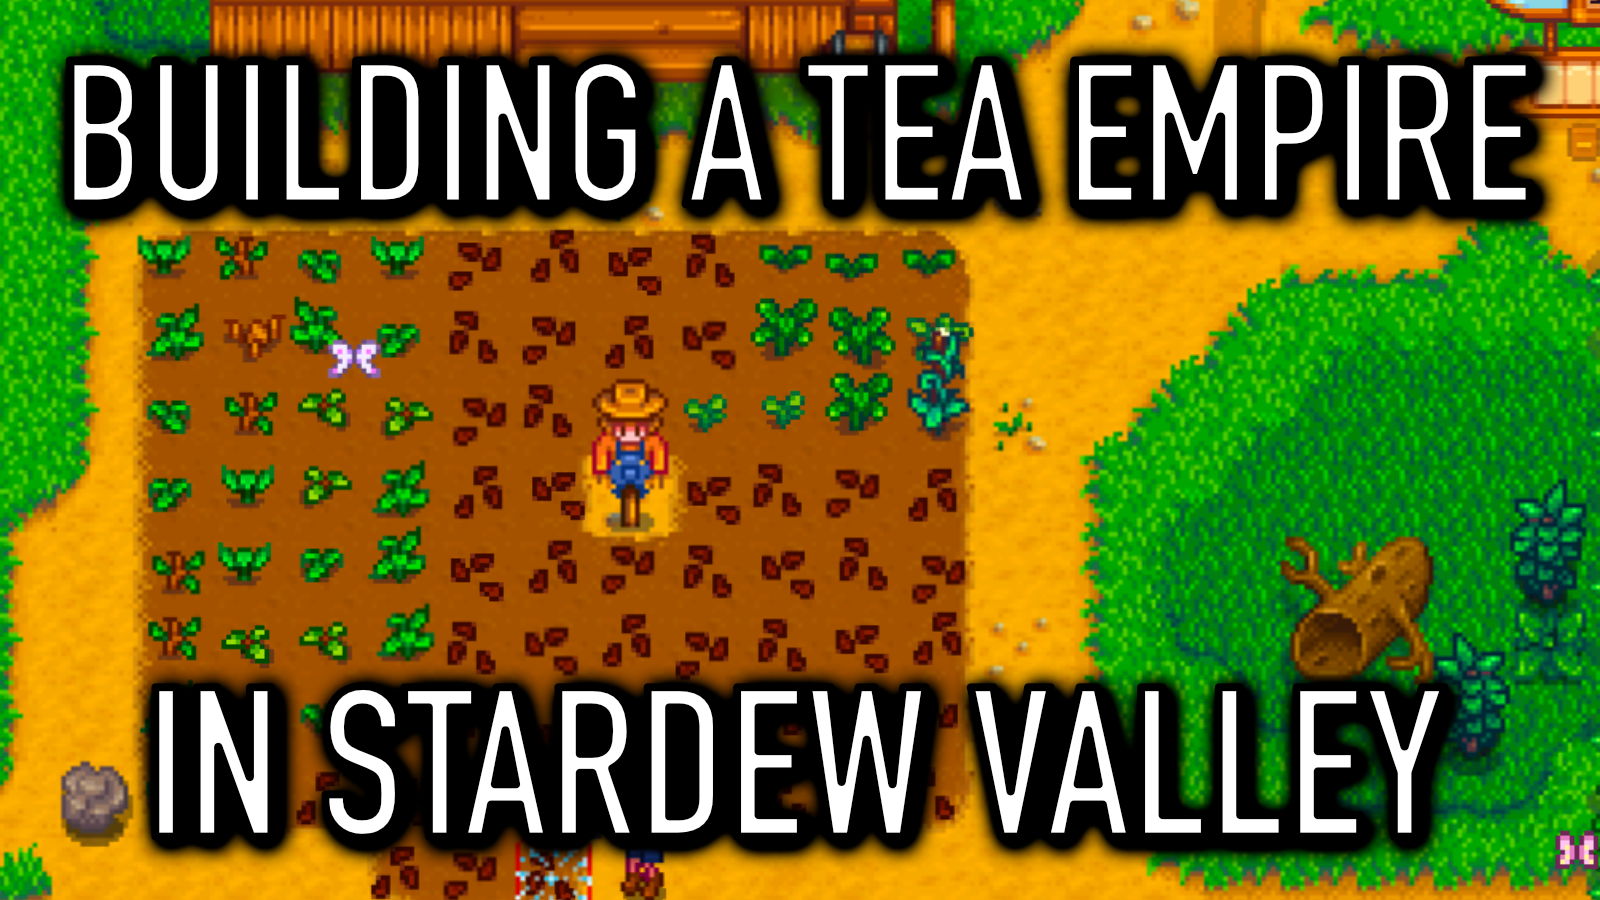 Building a tea empire - Stardew Valley Year 1 